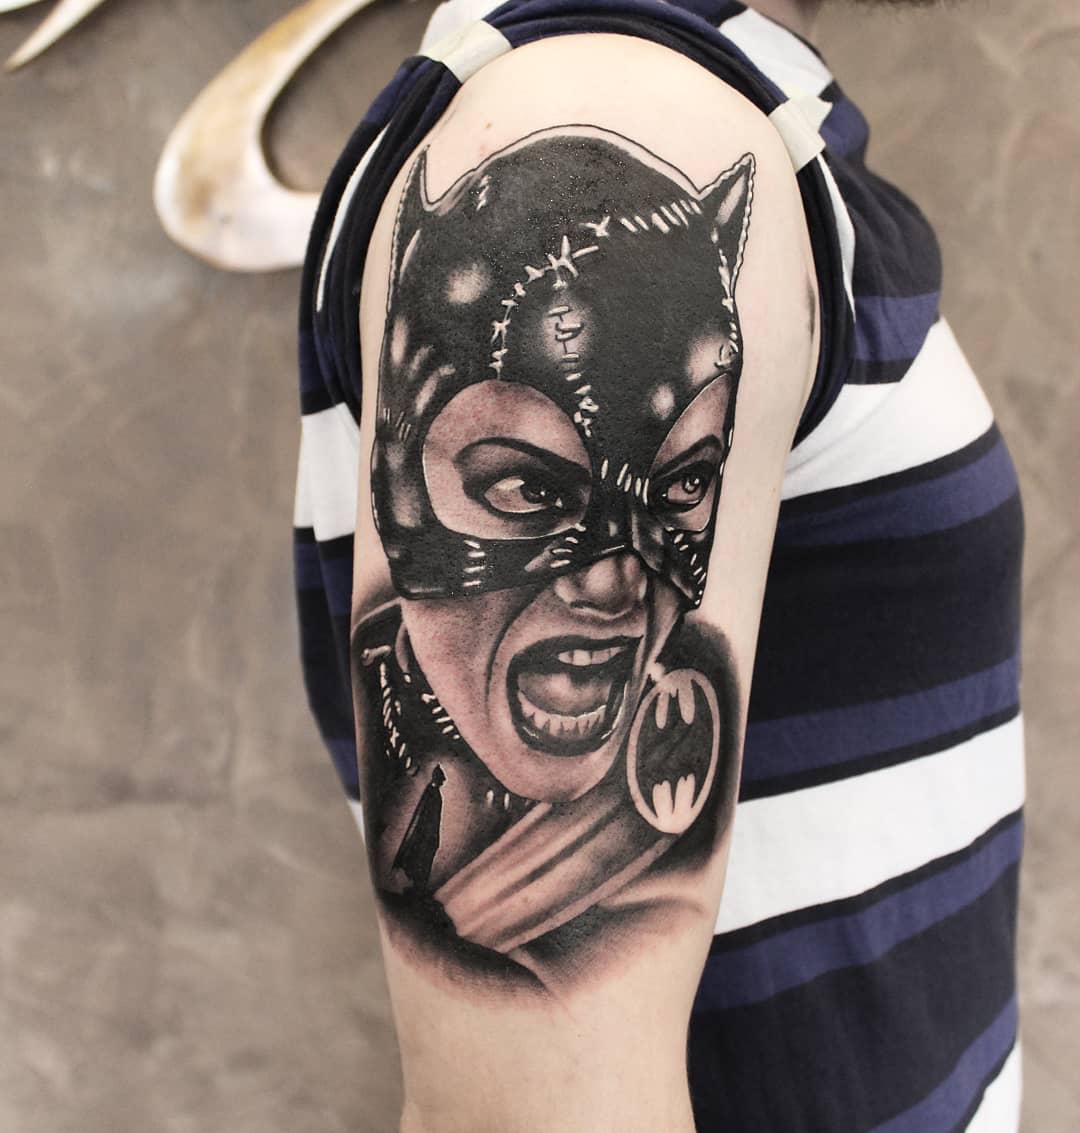 Next step on this batman-sleeve.
#germantattooers #tattooworkers #tattoolife #ge